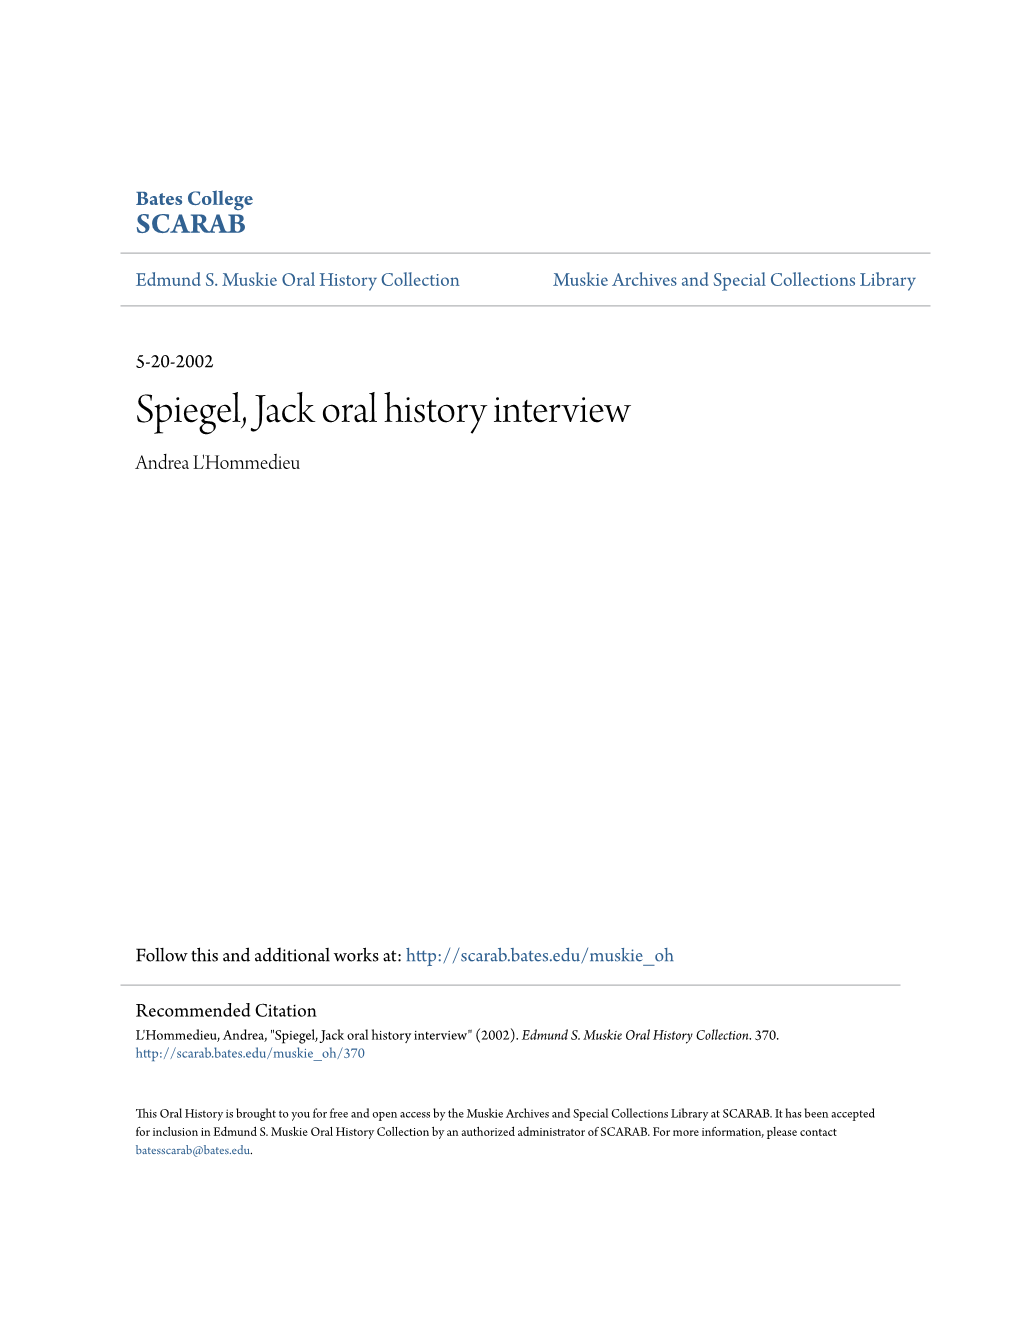 Spiegel, Jack Oral History Interview Andrea L'hommedieu